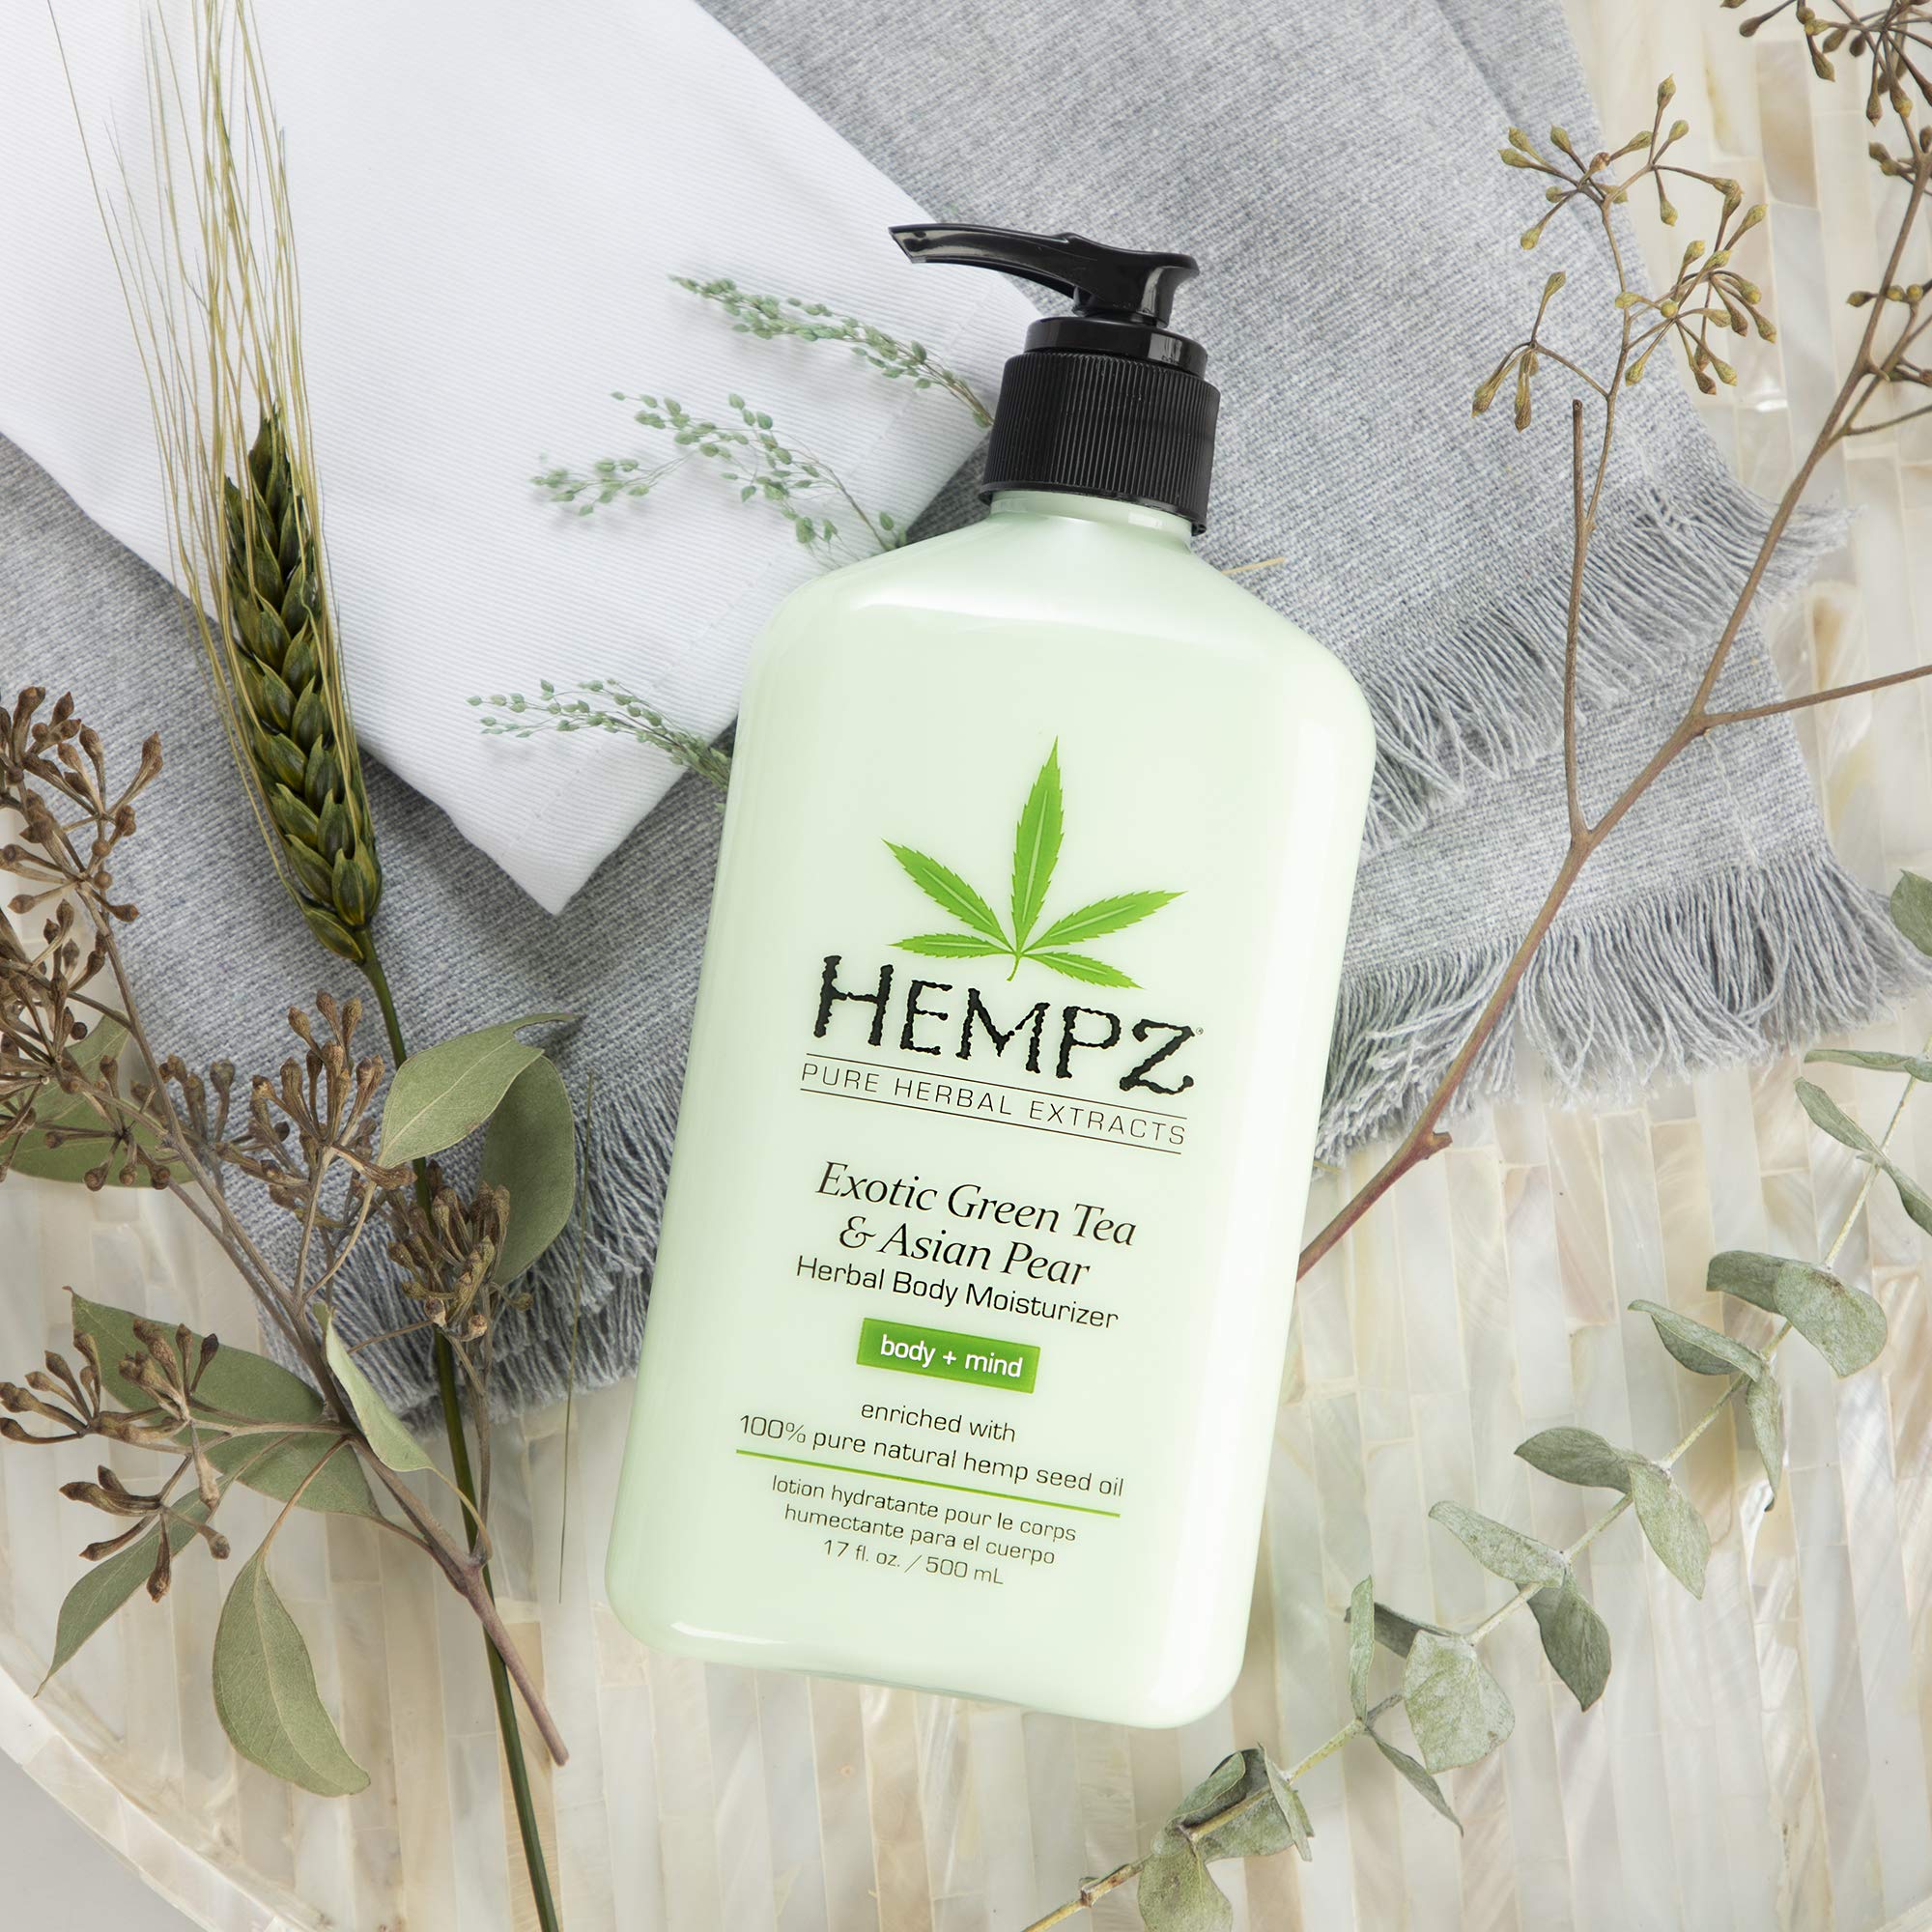 HEMPZ Body Lotion - Green Tea & Asian Pear Daily Moisturizing Cream, Shea Butter Body Moisturizer - Skin Care Products, Hemp Seed Oil - Large